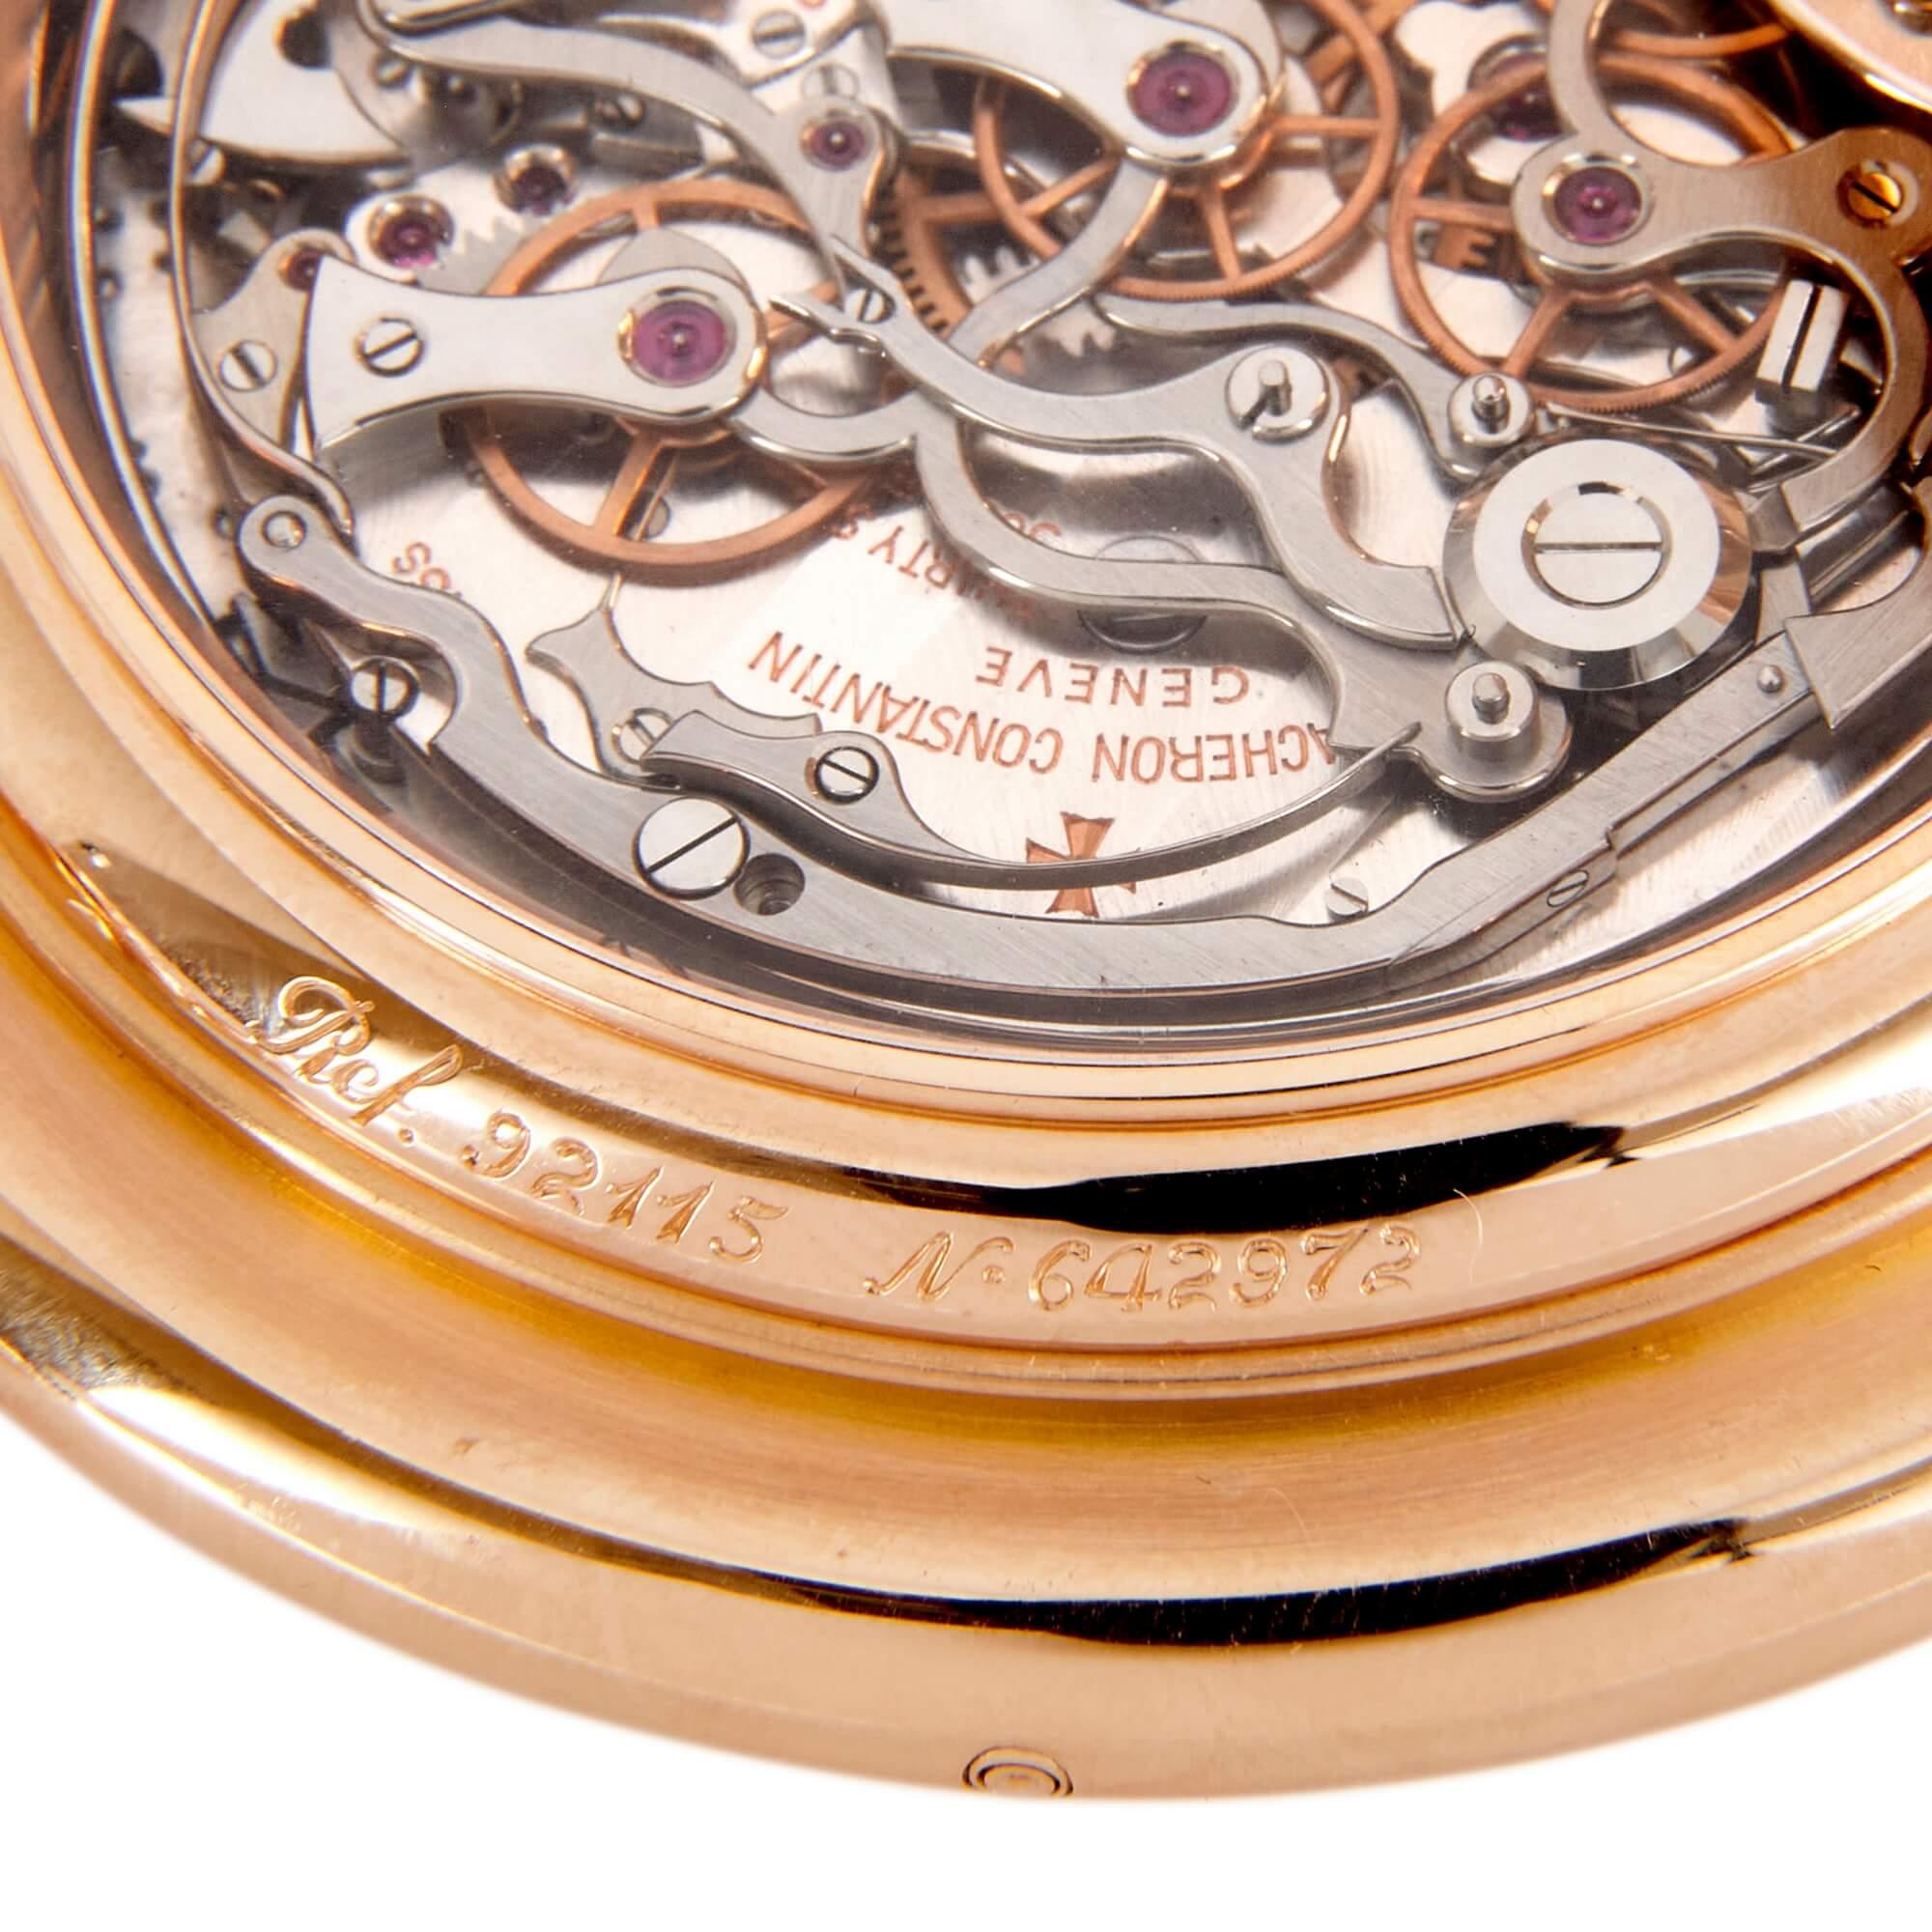 Gold Vacheron Constantin Ref. 92115, a very fine, unique 18K pink gold pocket watch For Sale